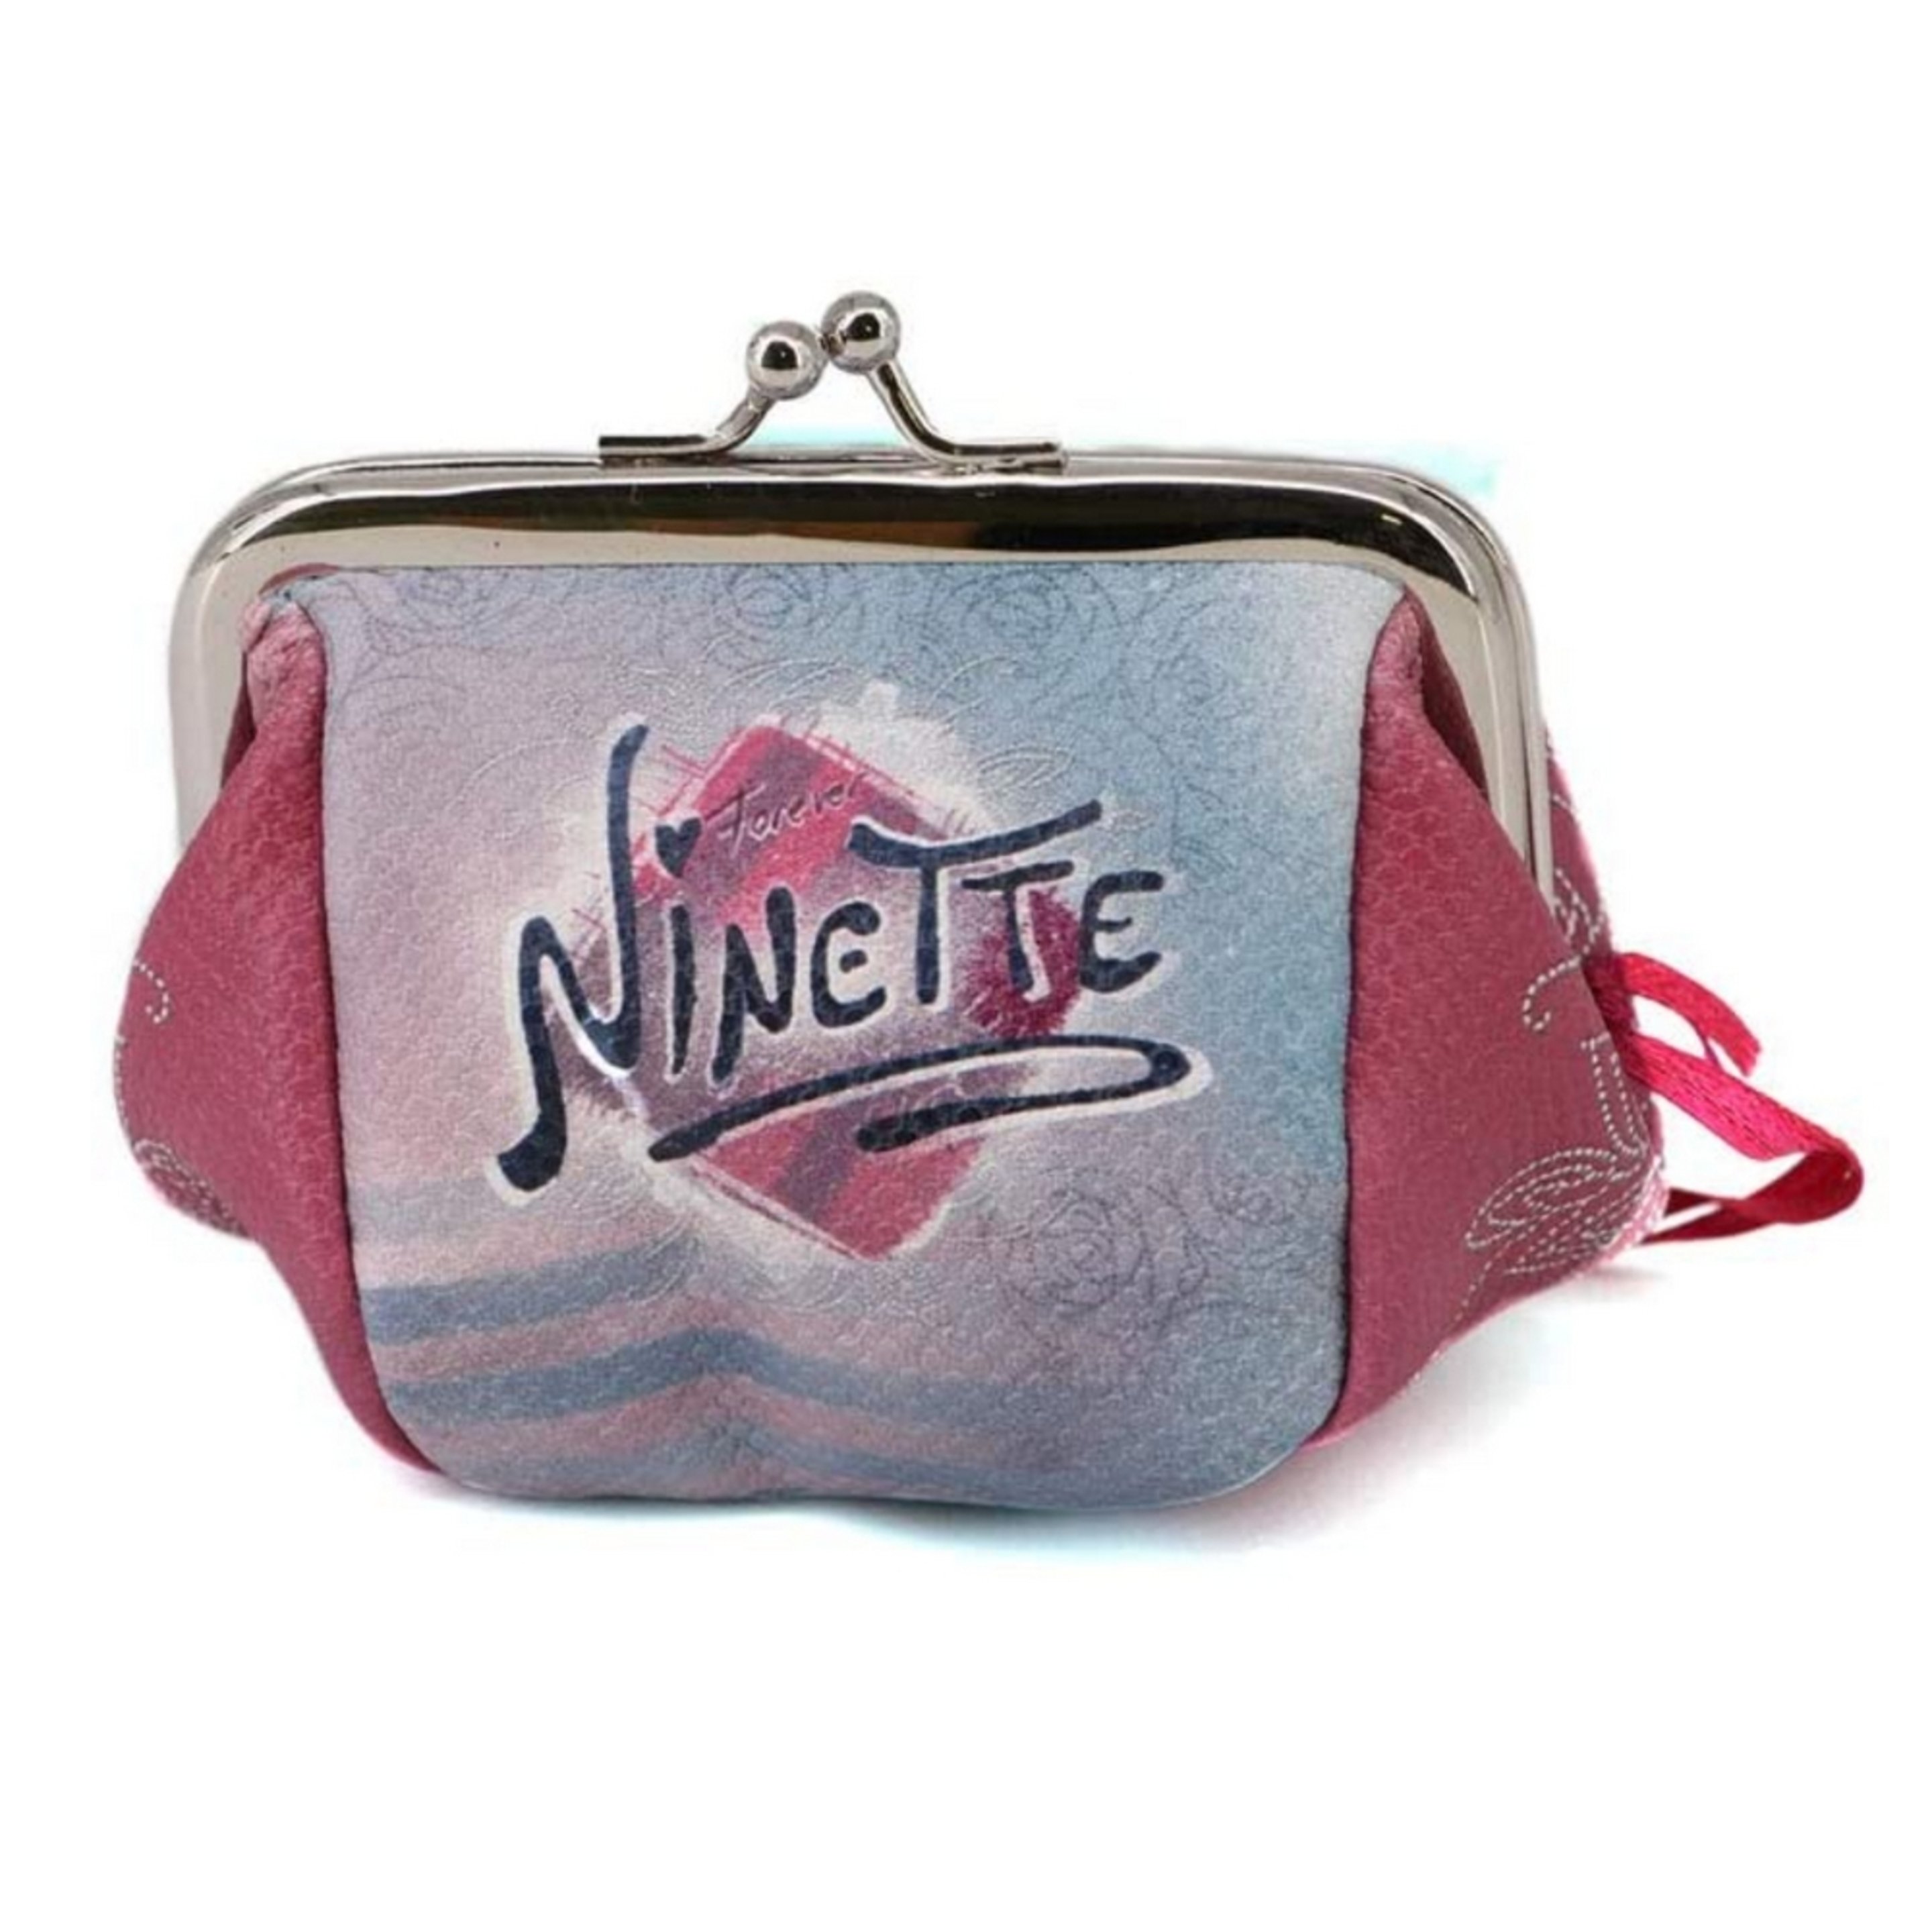 Bolsa Ninette.